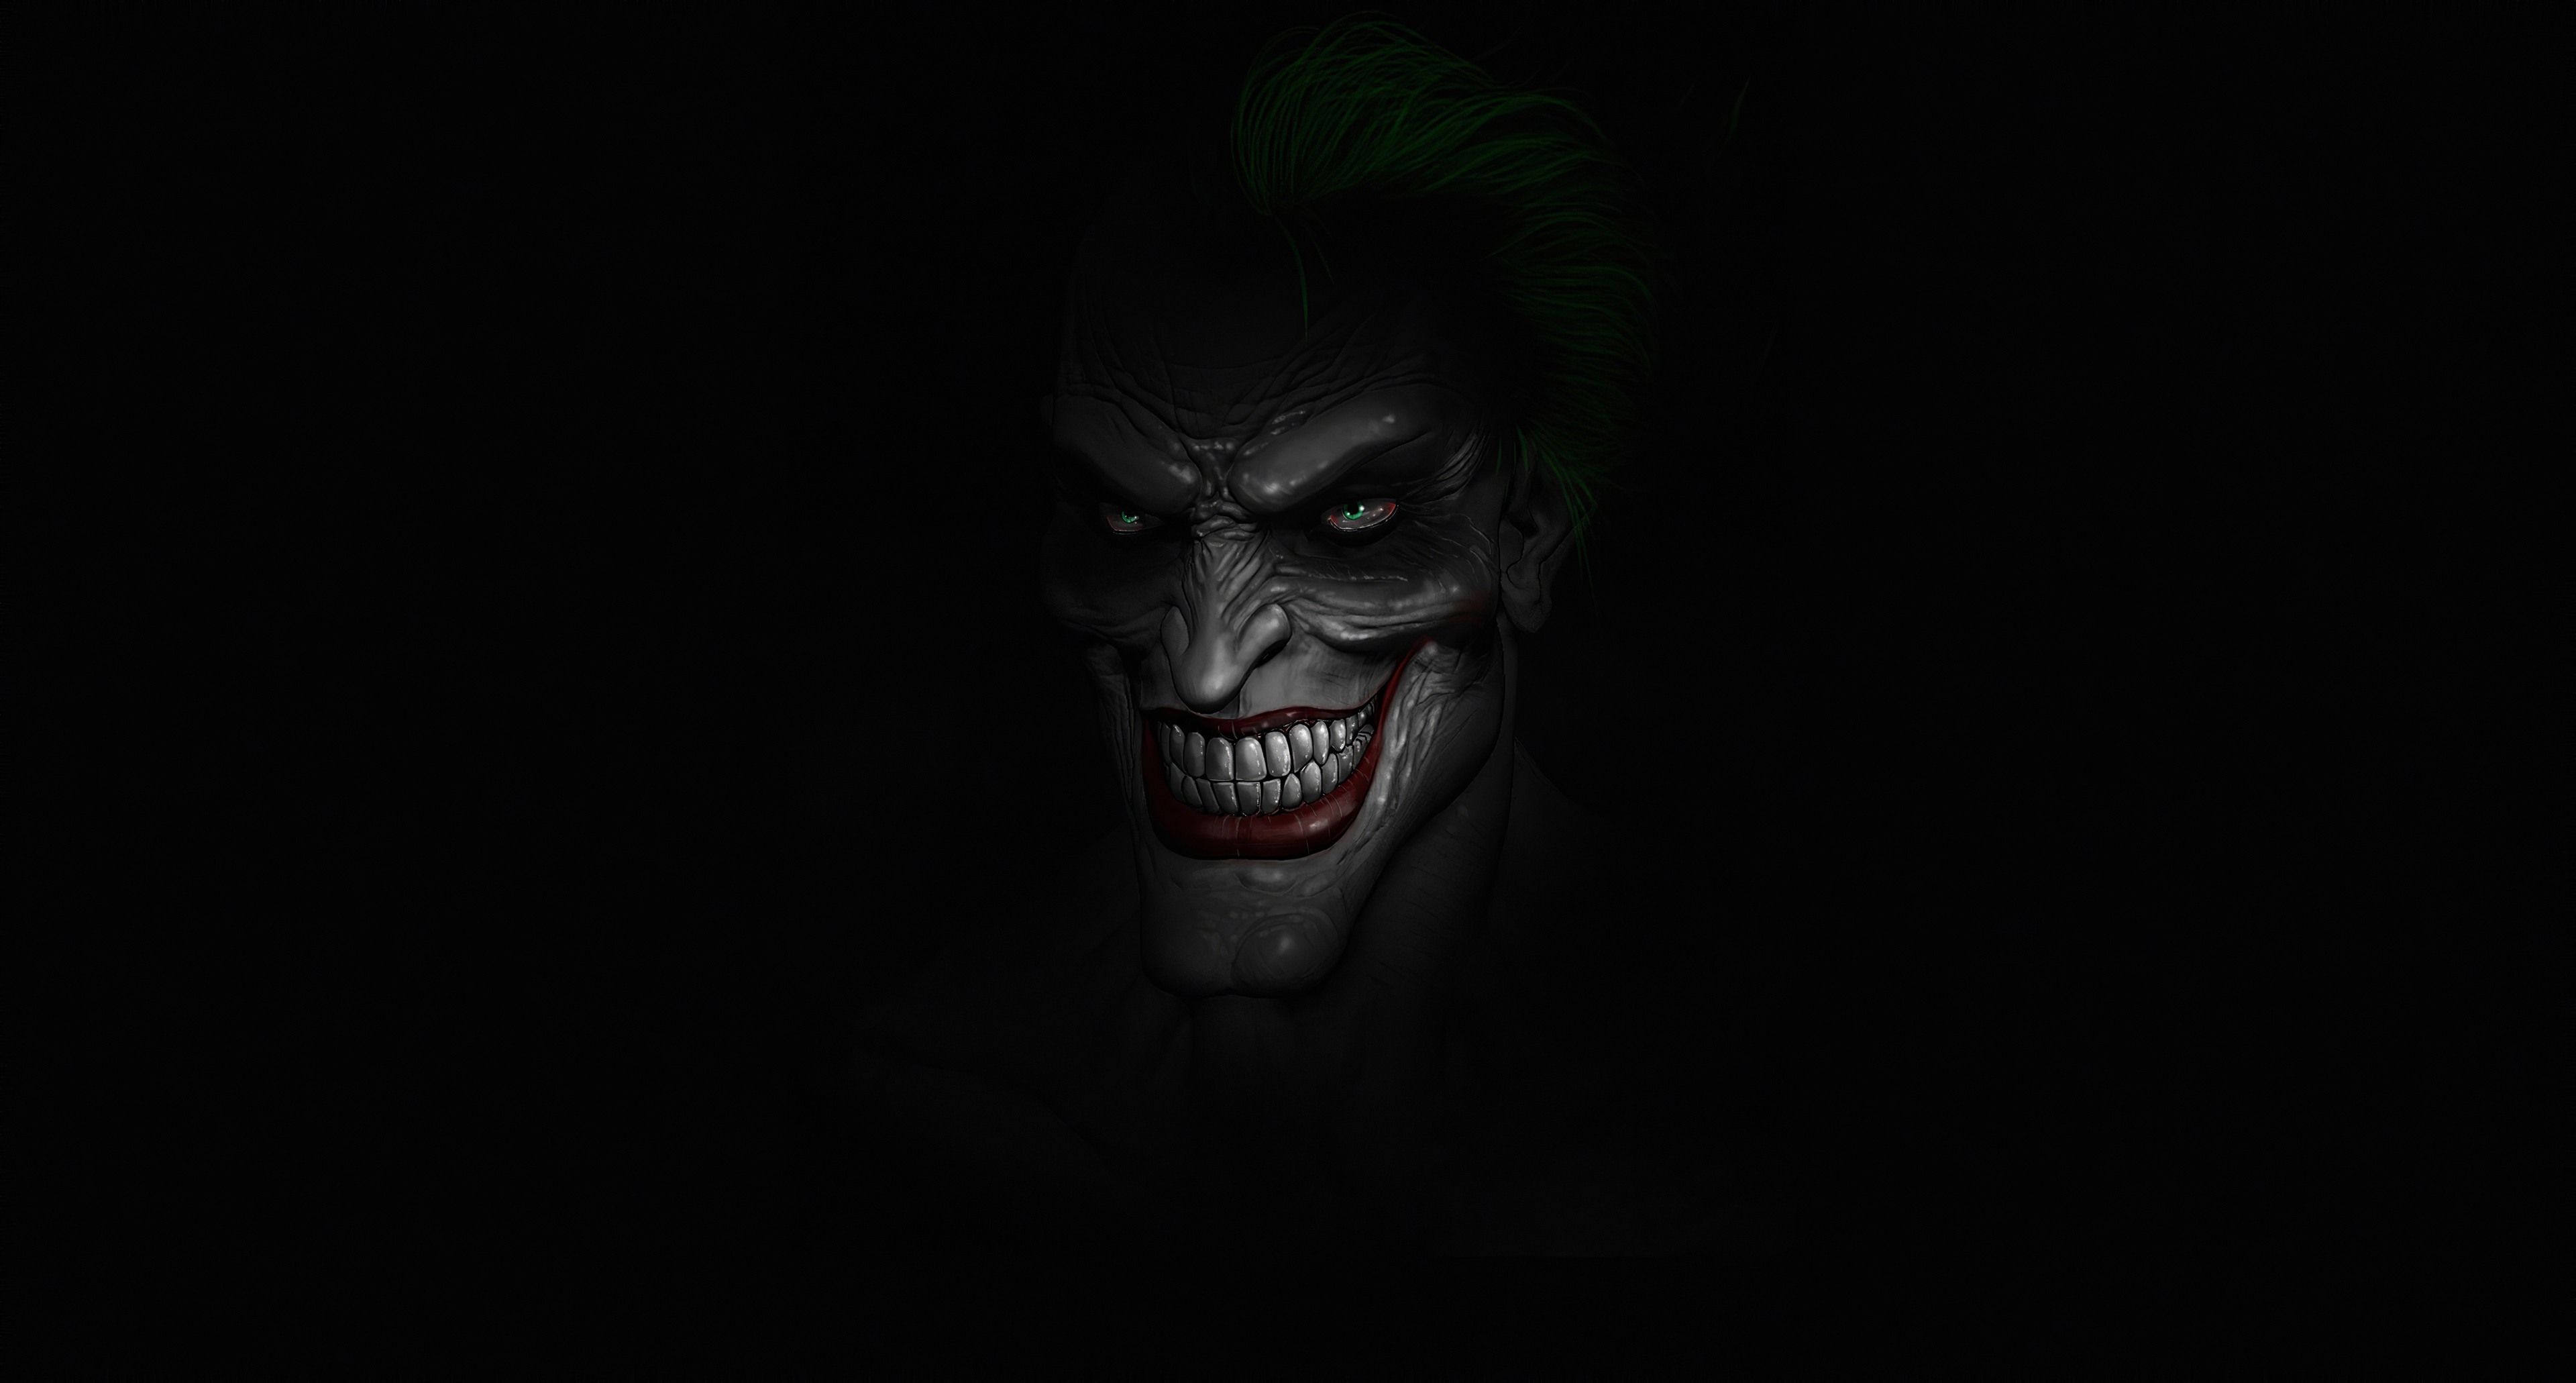 512x512 Scary Joker Minimal 4K 512x512 Resolution Wallpaper, HD ...